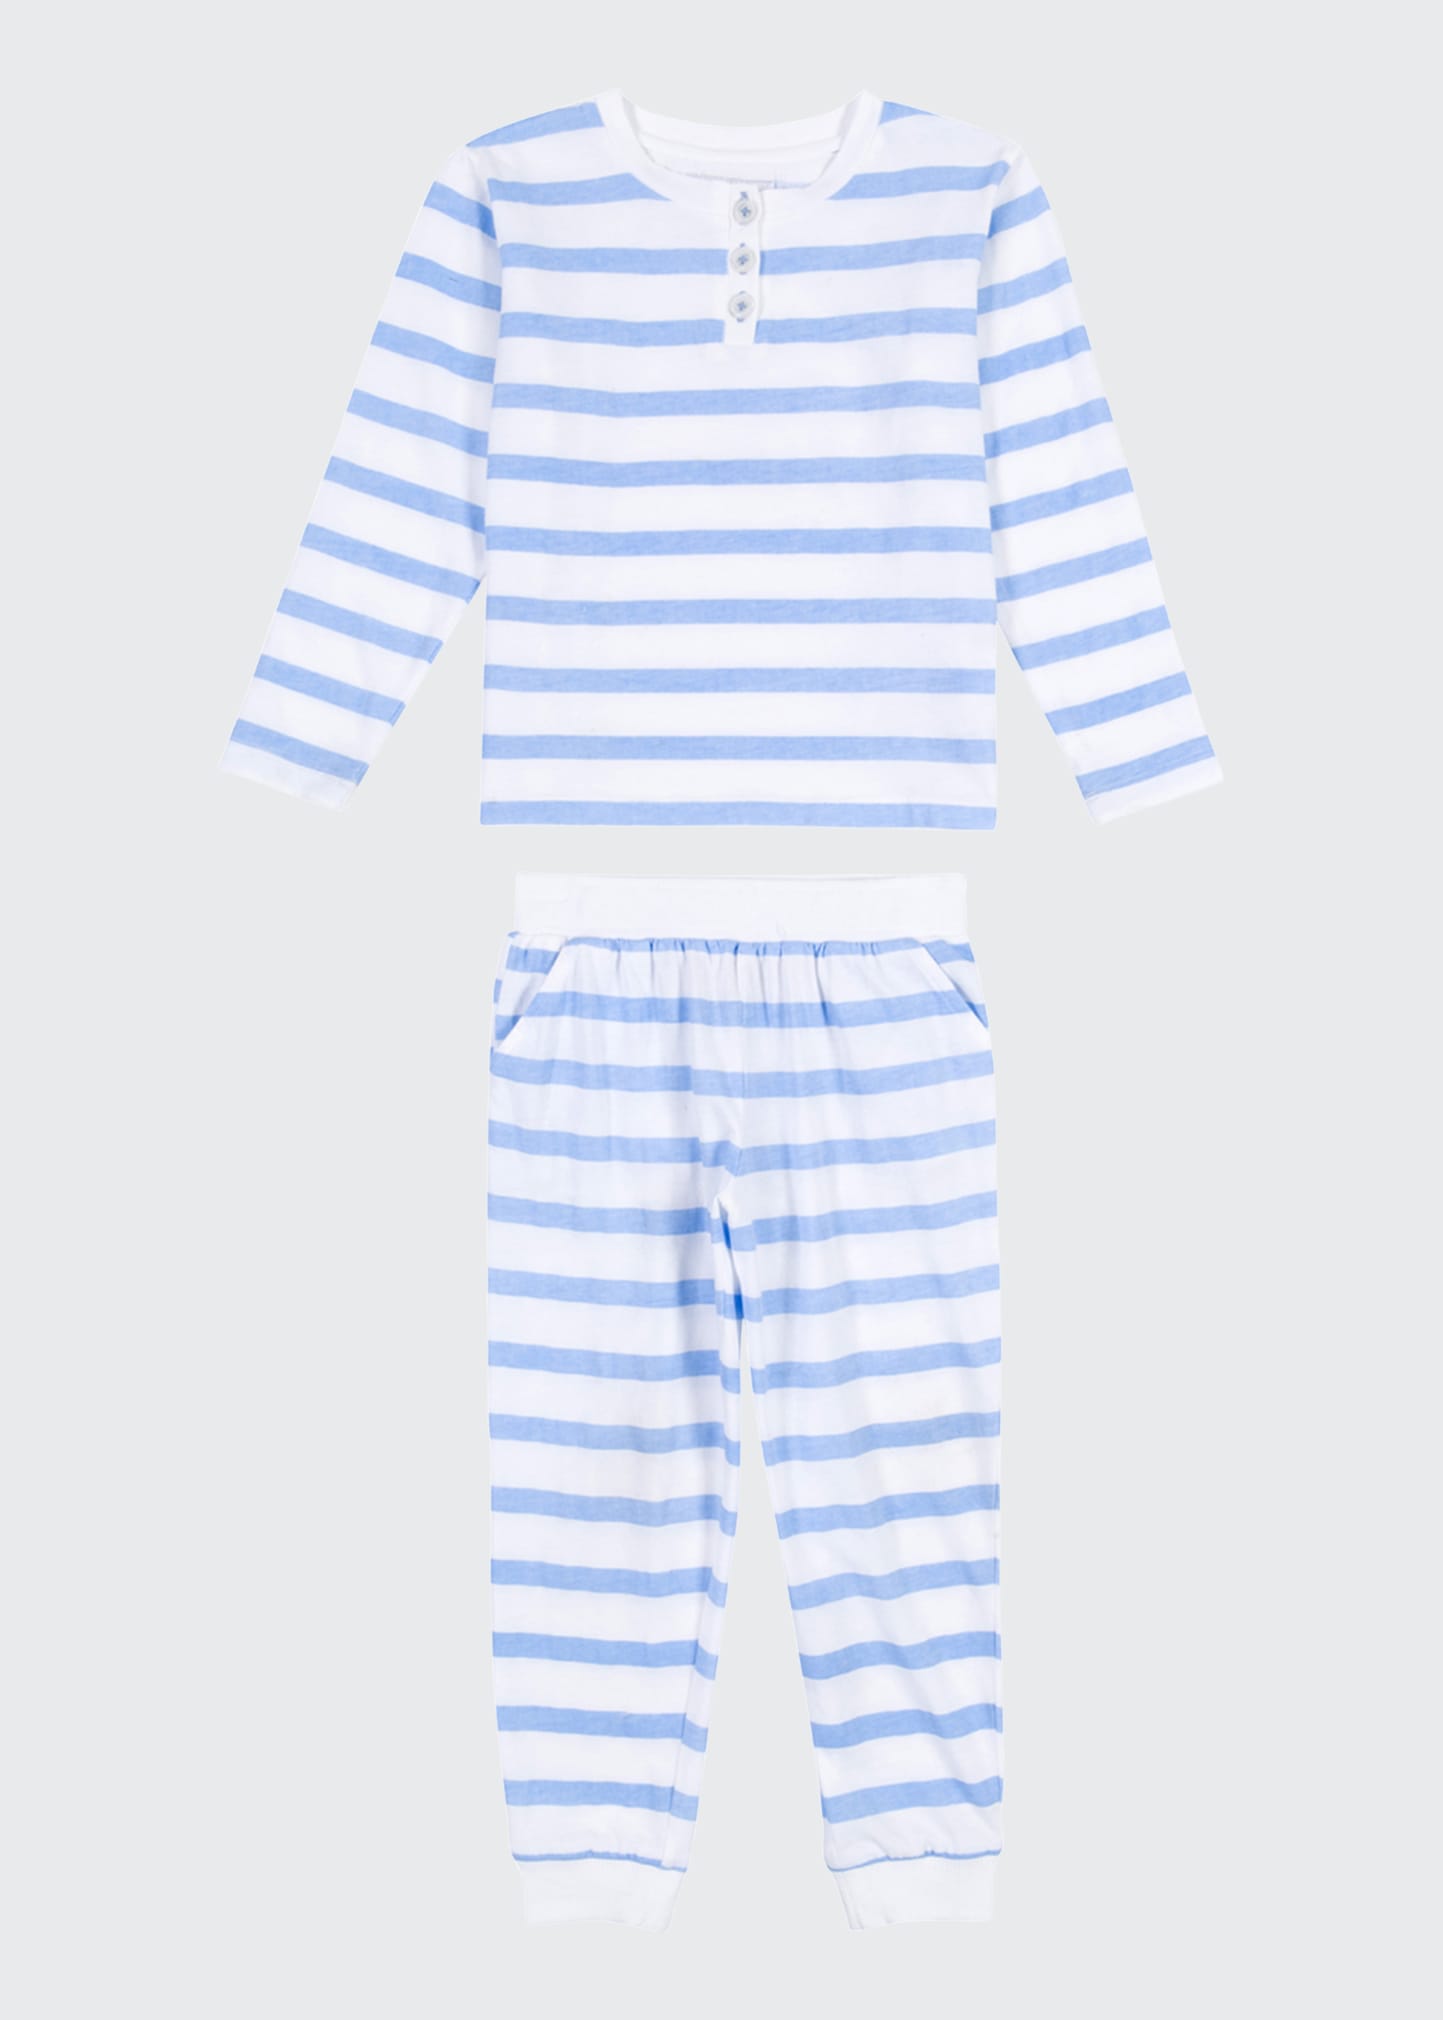 Sant And Abel Kids' Boy's Striped 2-piece Shirt & Pants Set In Blue